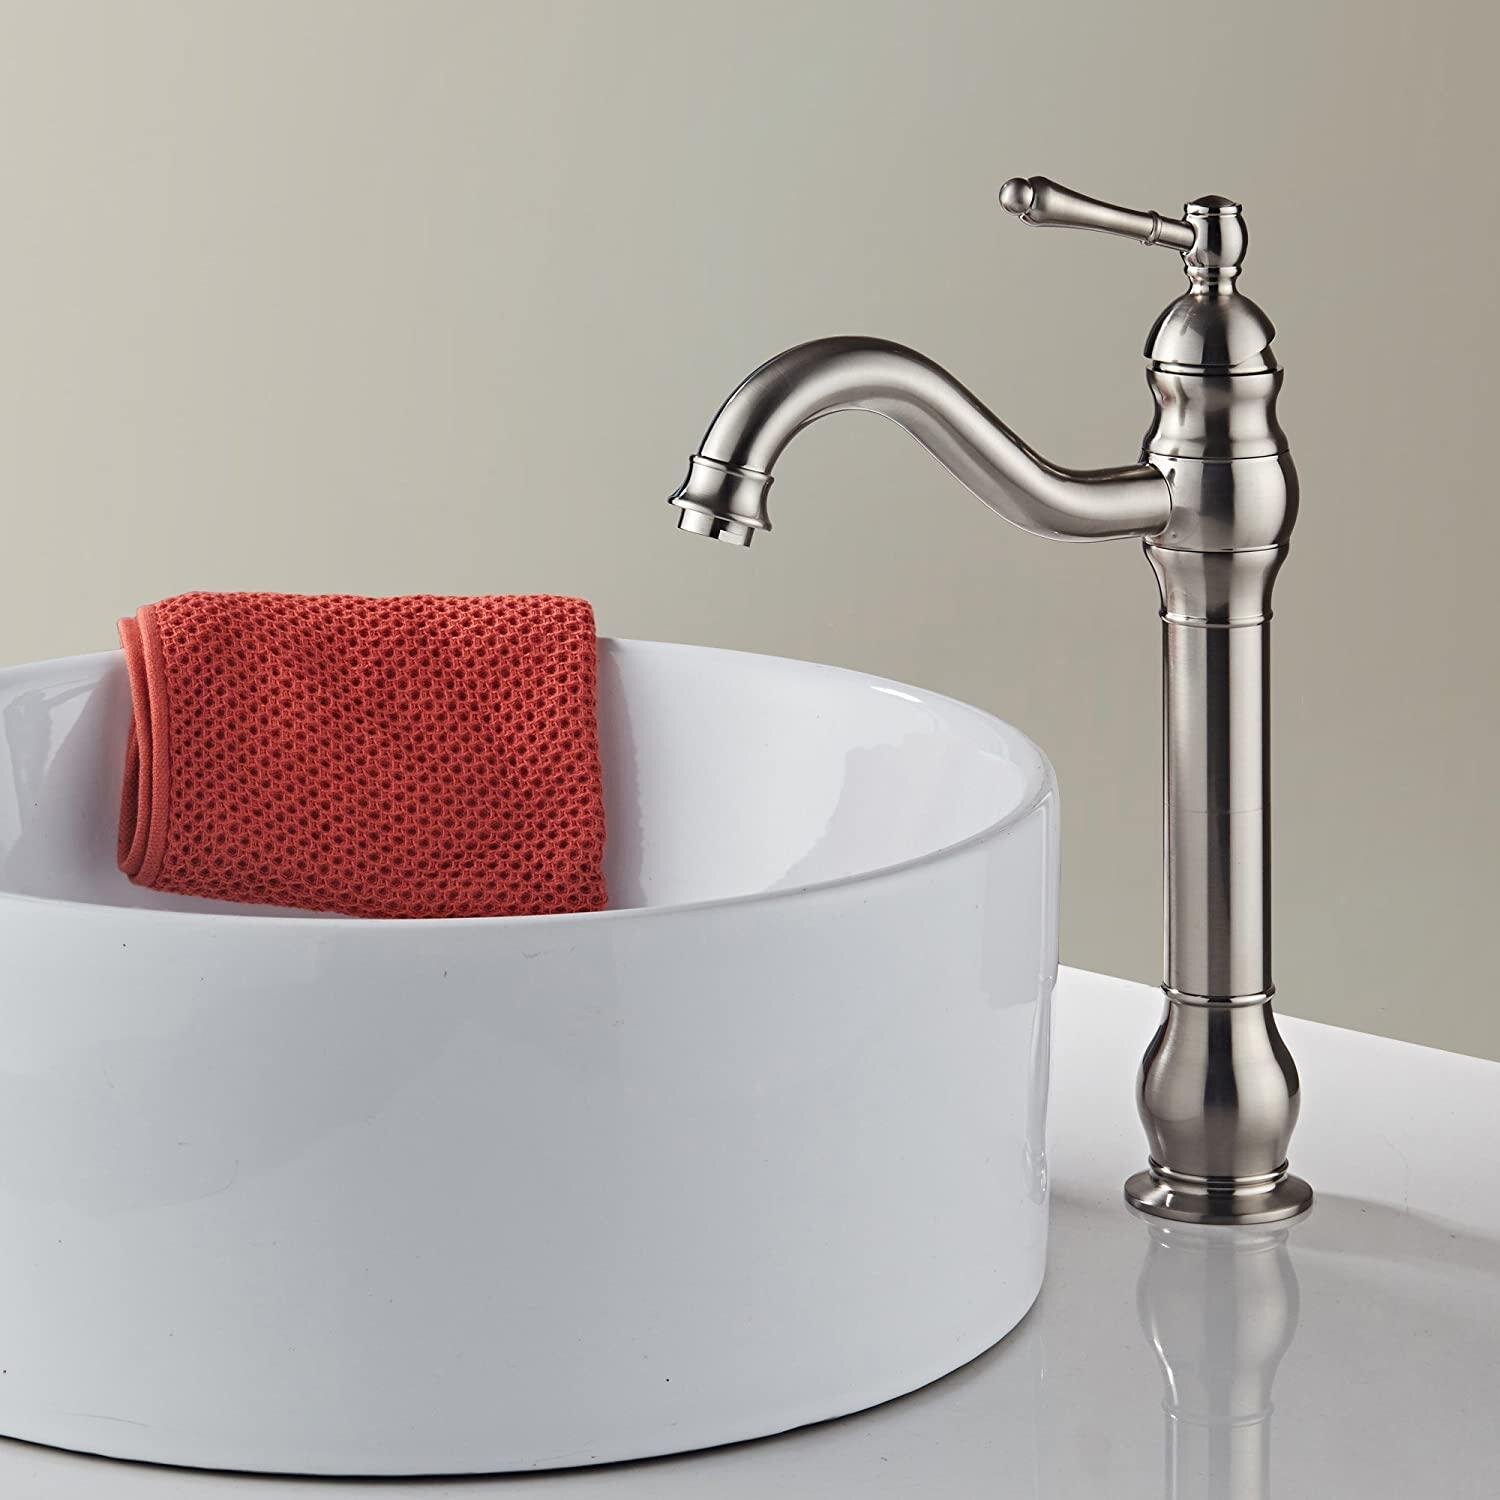 Black & Silver 12.6" Bathroom Basin Sink Mixer Faucet 1 Handle Deck Mounted Taps 